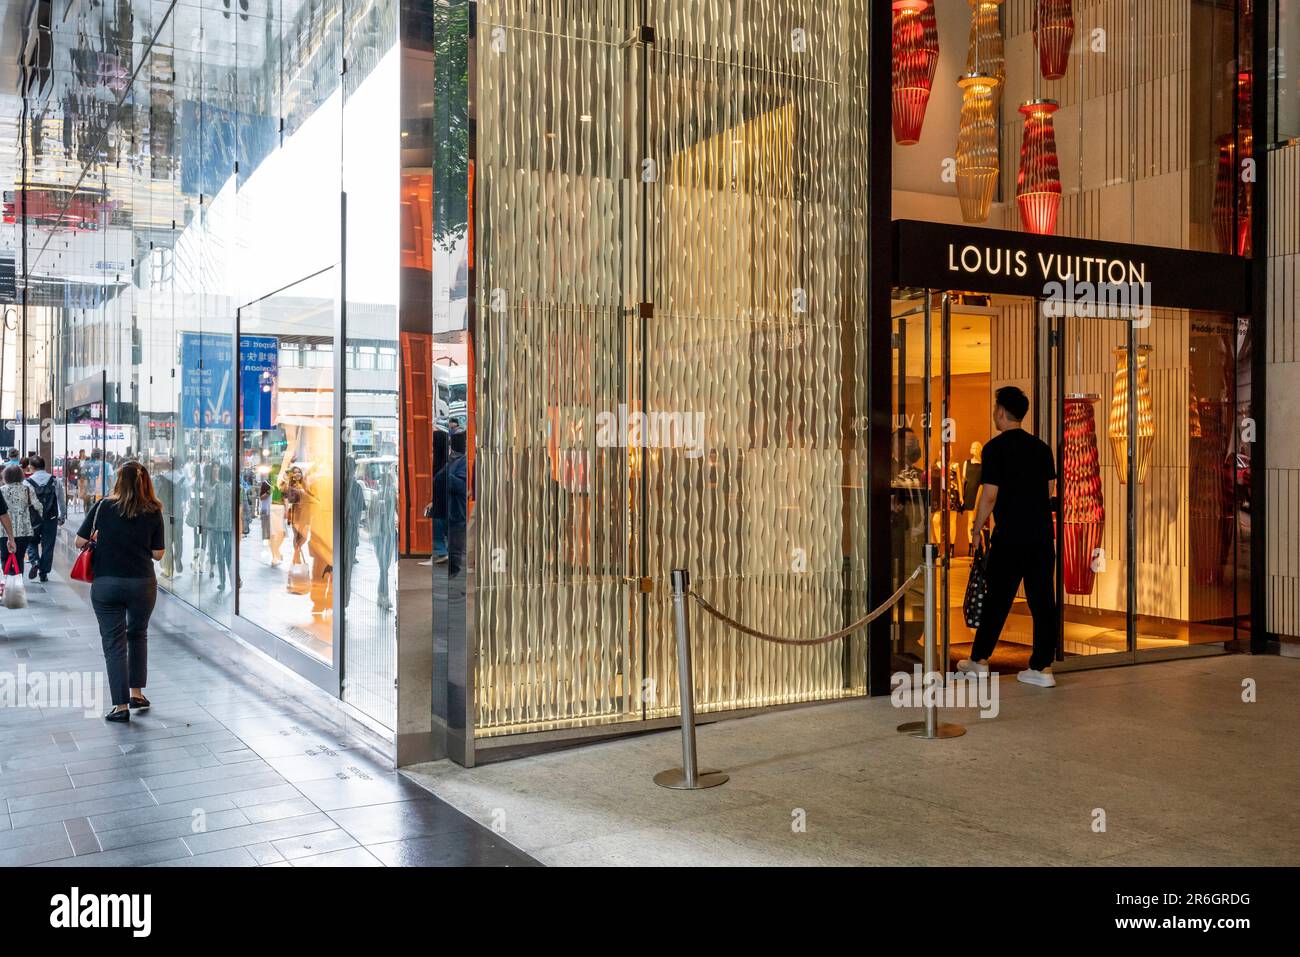 Travel Photo of The Week -- Louis Vuitton Store, Hong Kong: Then